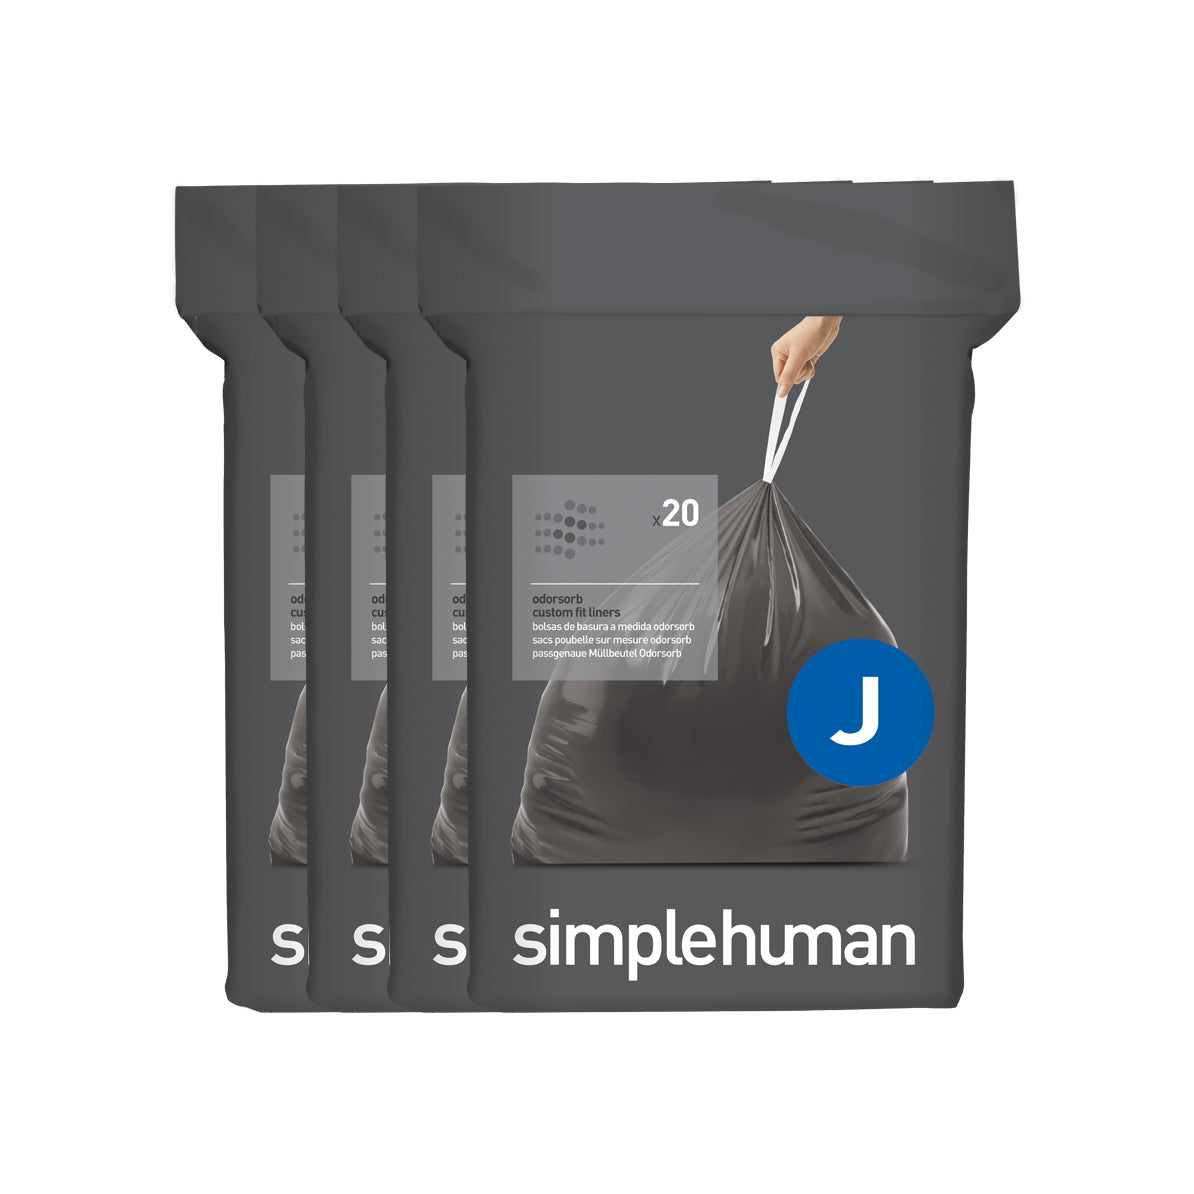 simplehuman Code P Custom Fit Liners (60 Count)